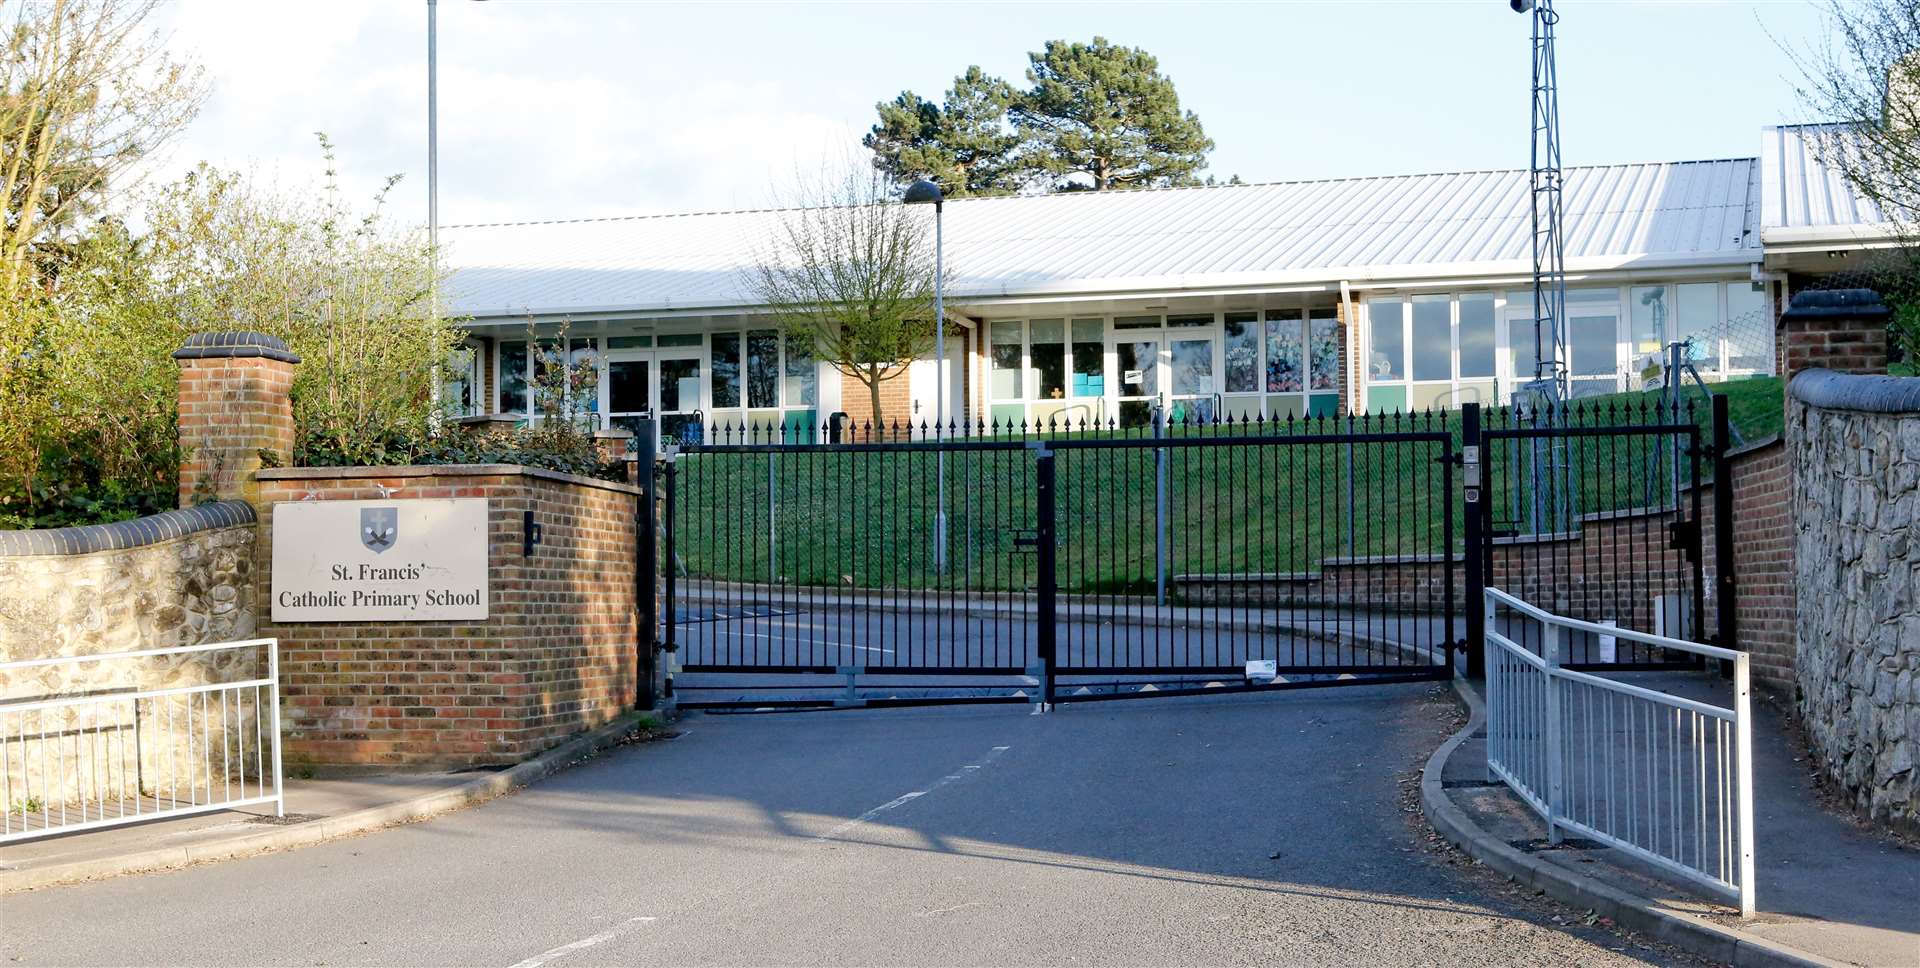 St Francis' Catholic Primary School, Queen's Road, Maidstone. Picture: Matthew Walker